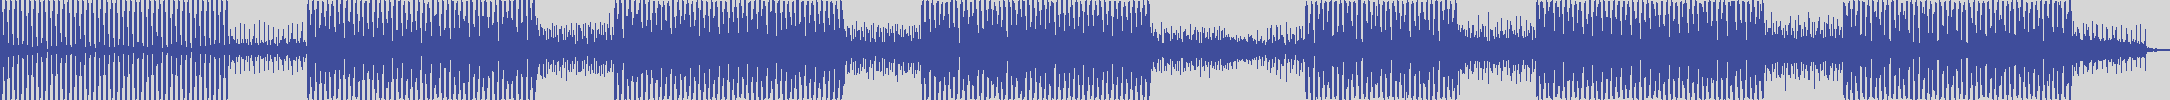 nf_boyz_records [NFY074] Neuron 99 - Hyperspace [Laser Mix] audio wave form